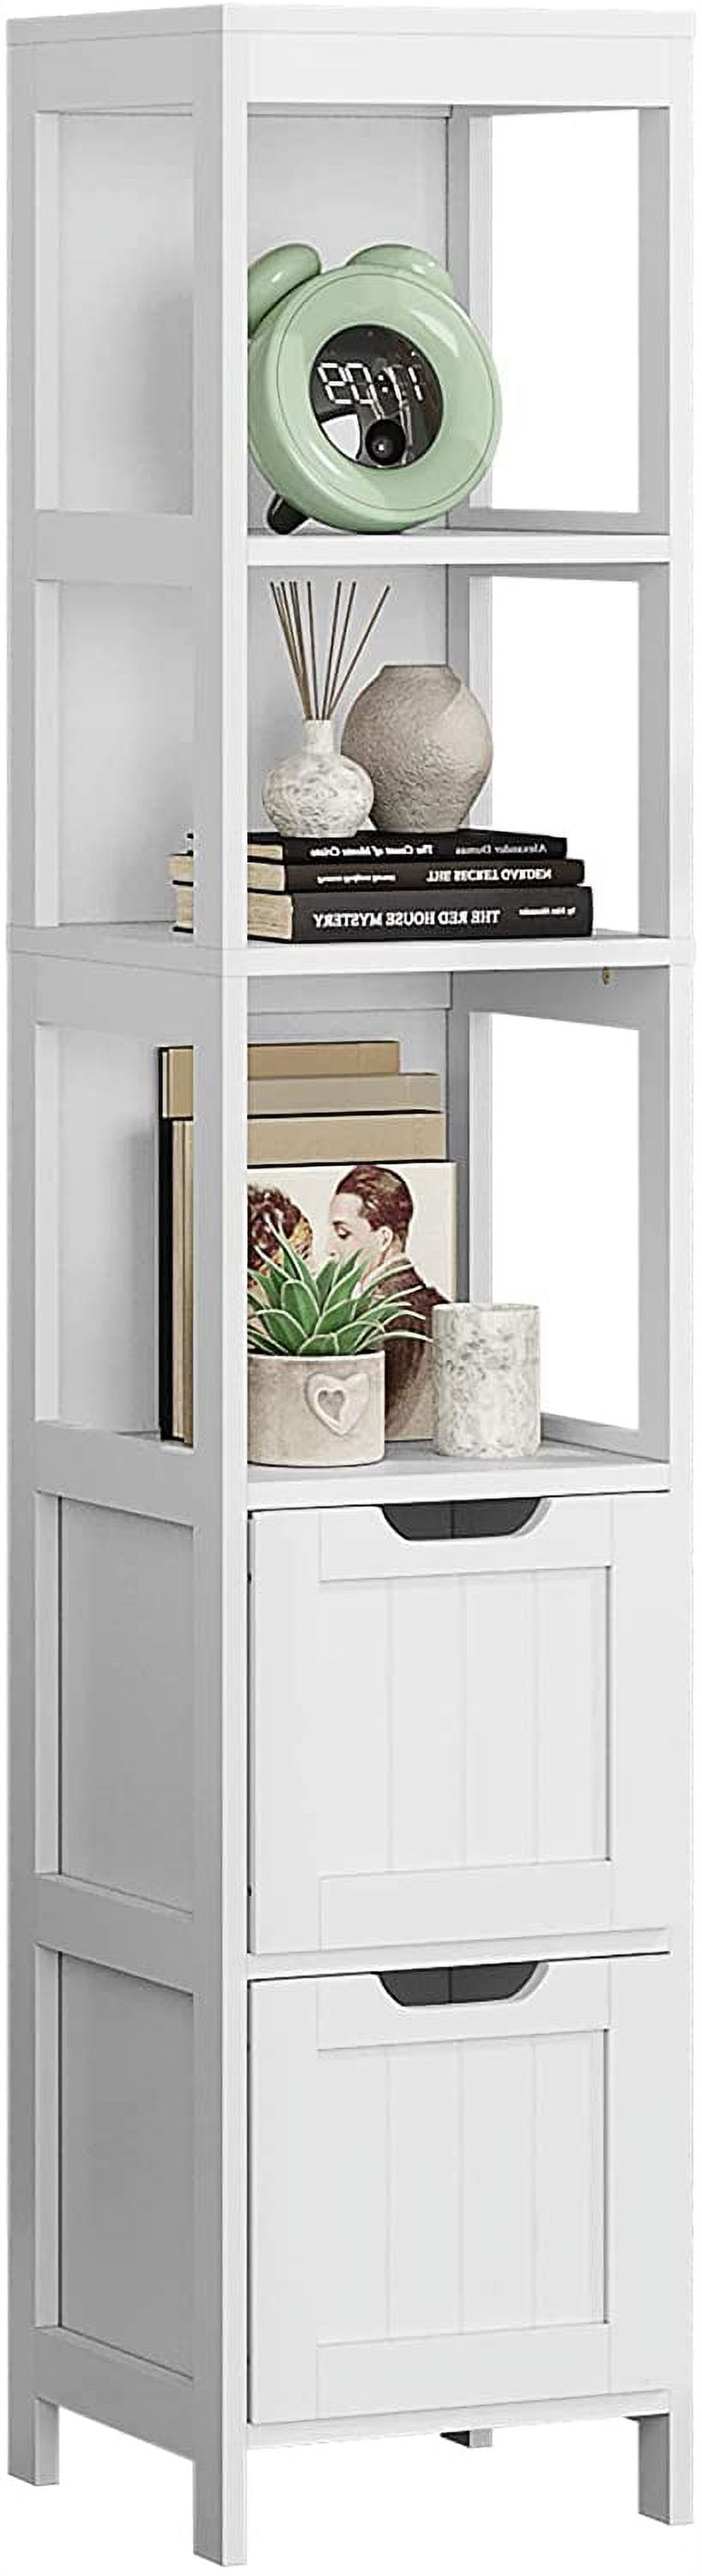 Spirich Home Tall Narrow Storage Cabinet, Bathroom Floor Slim Cabinet with  Glass Doors, Freestanding Linen Tower, White - On Sale - Bed Bath & Beyond  - 36233621